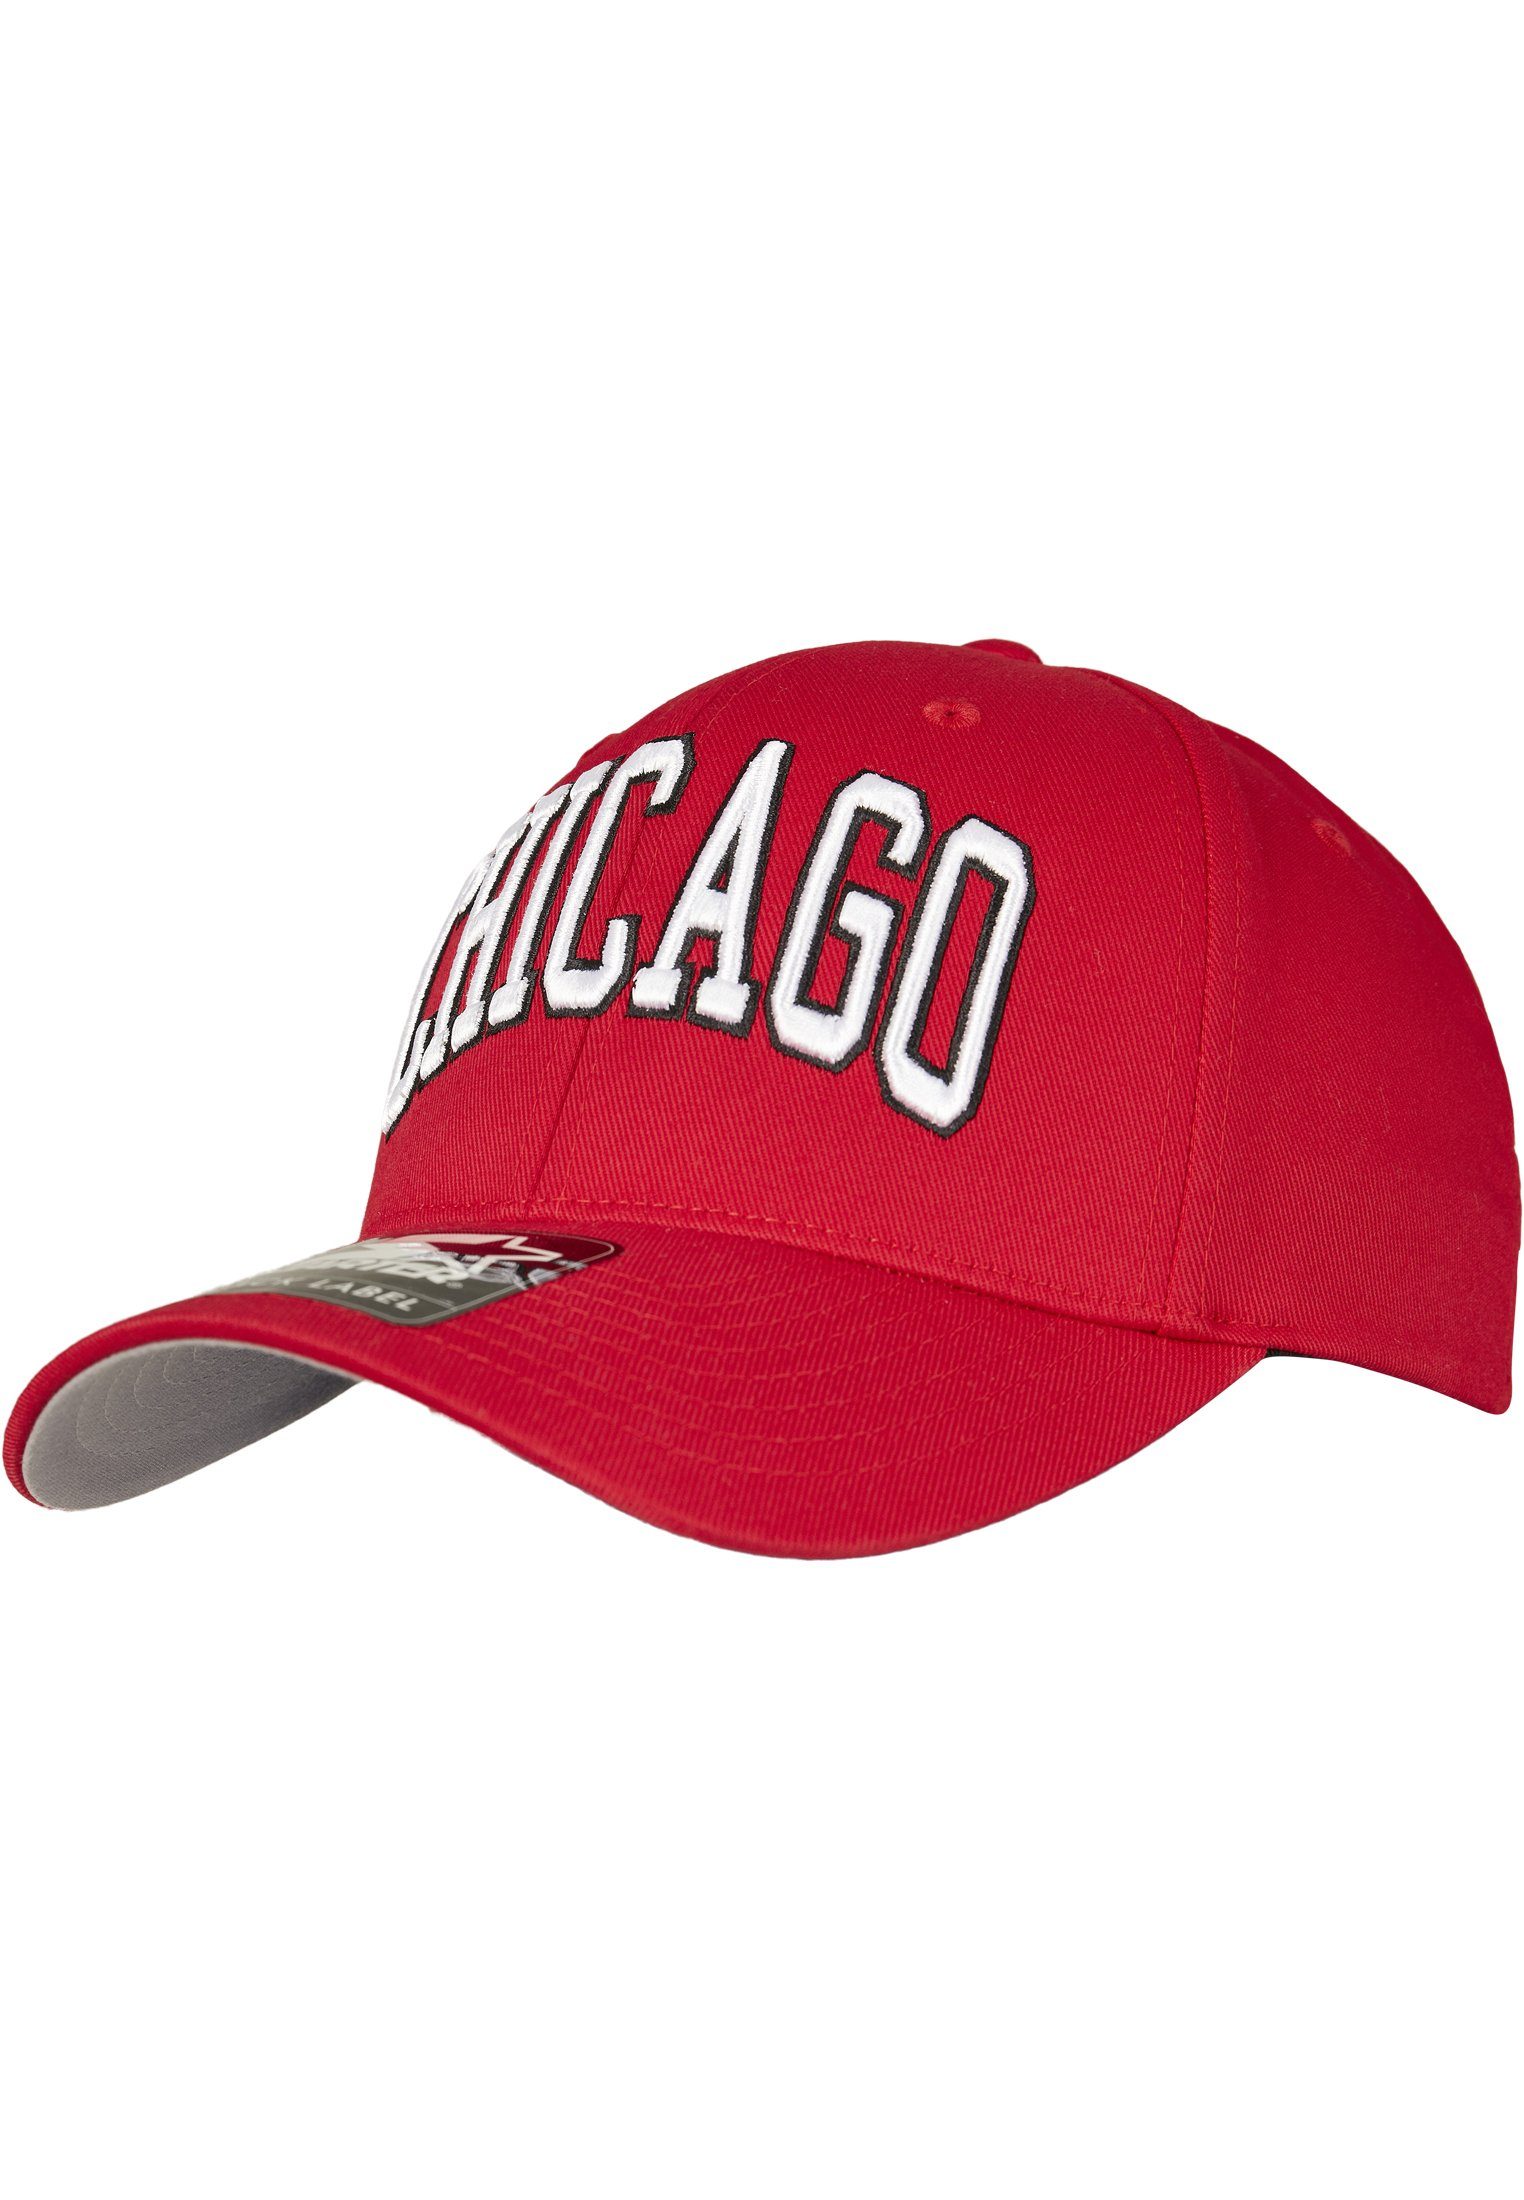 Cap Cap Herren Chicago Starter red Flex Flexfit Starter Label Black